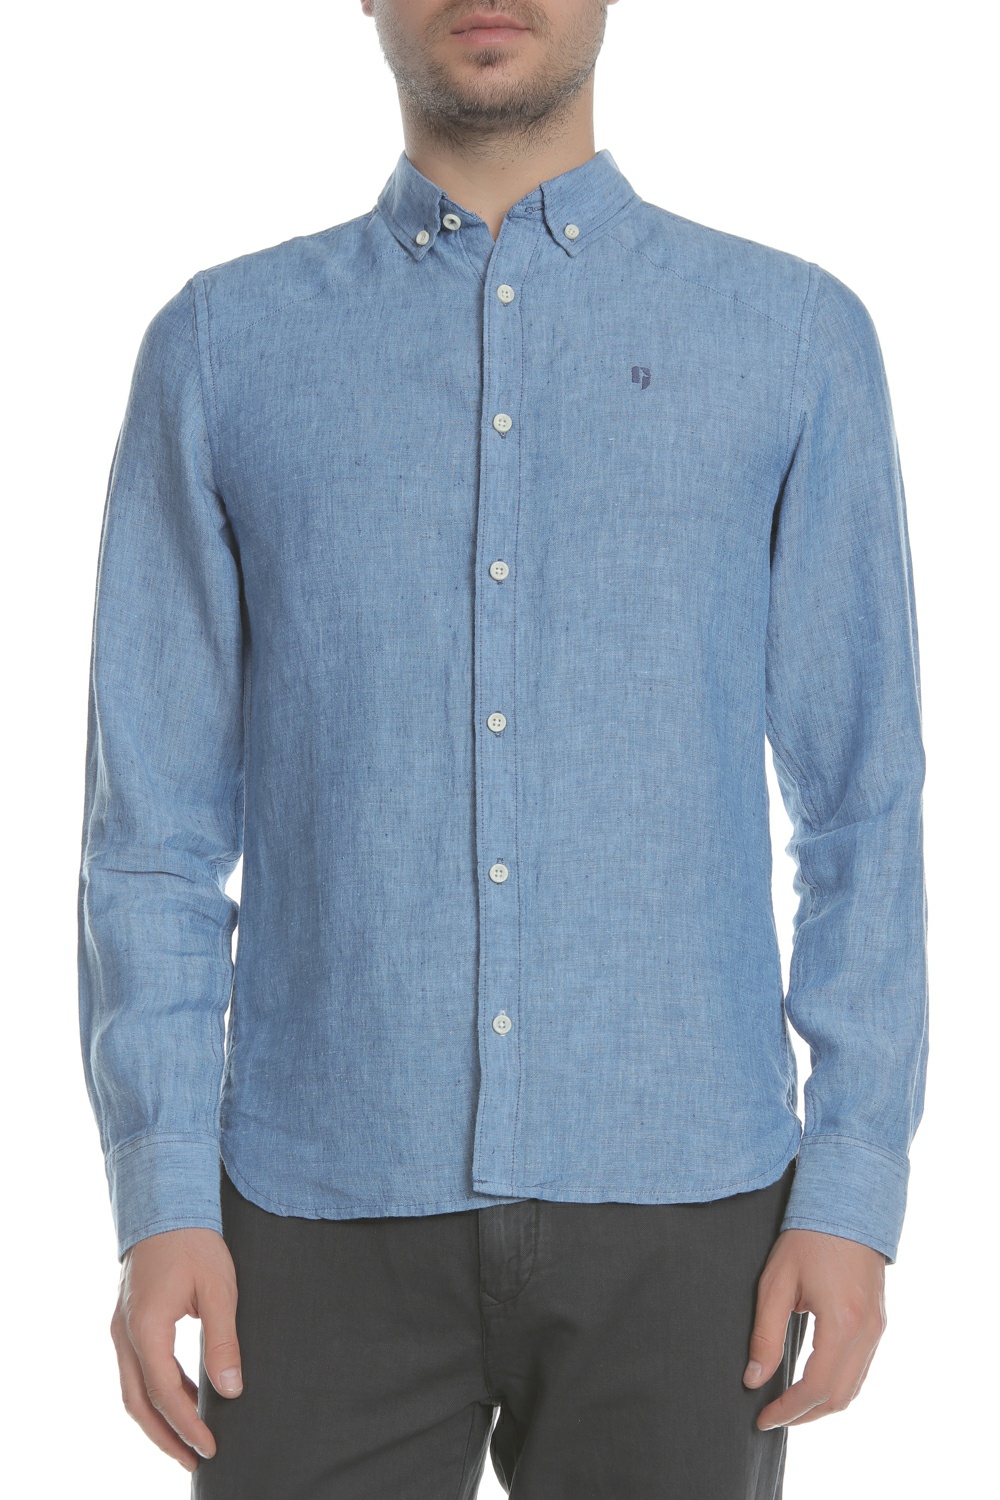 GARCIA JEANS - Ανδρικό μακρυμάνικο πουκάμισο Garcia Jeans μπλε Ανδρικά/Ρούχα/Πουκάμισα/Μακρυμάνικα